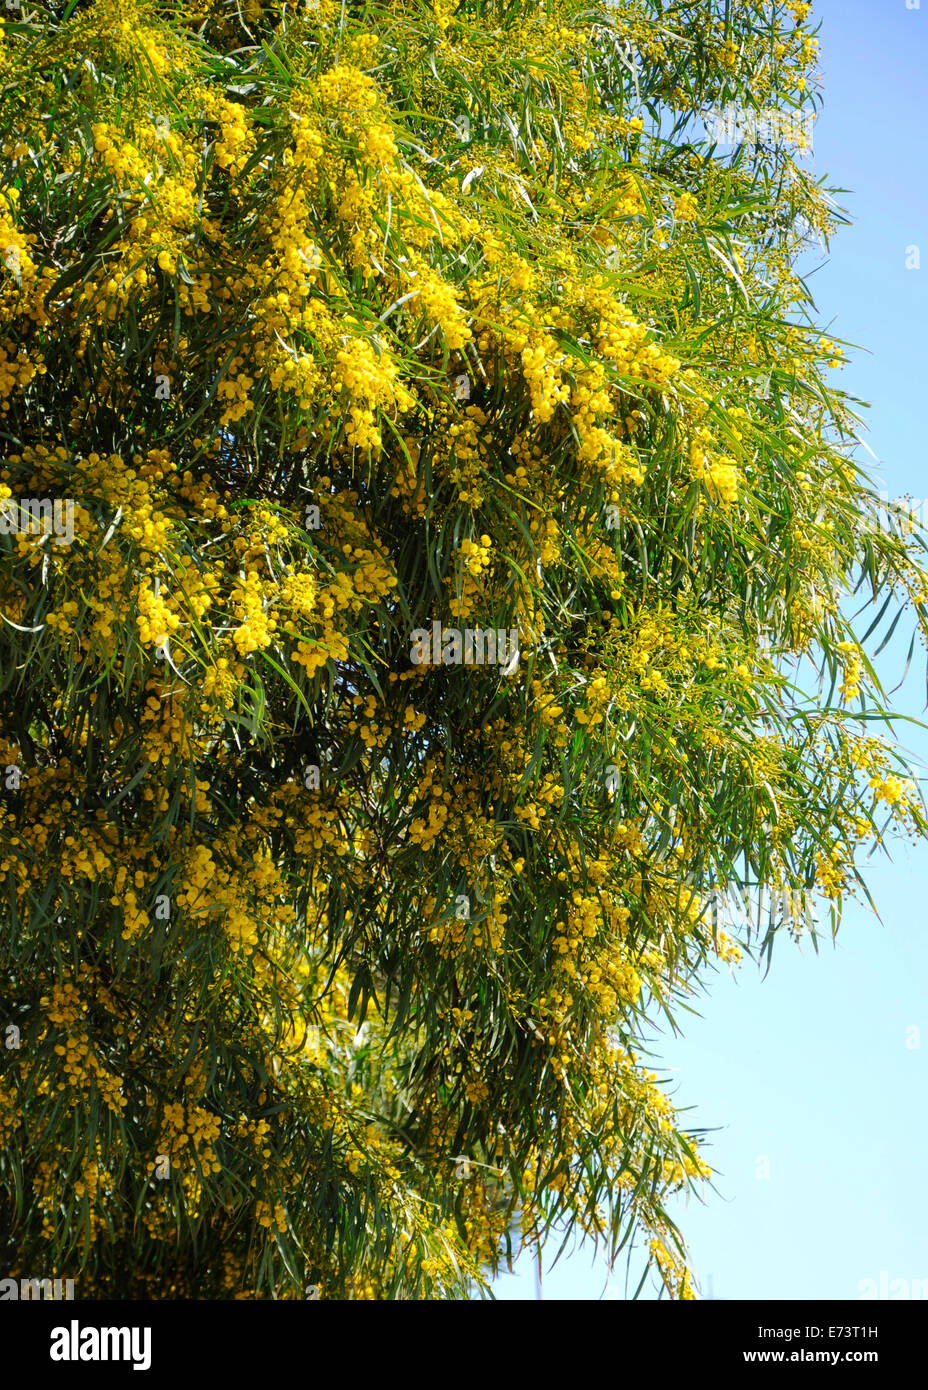 Beautiful Australian Wattle Acacia Tree In Full Winter Bloom Against A Blue Sky Stock Photo Alamy